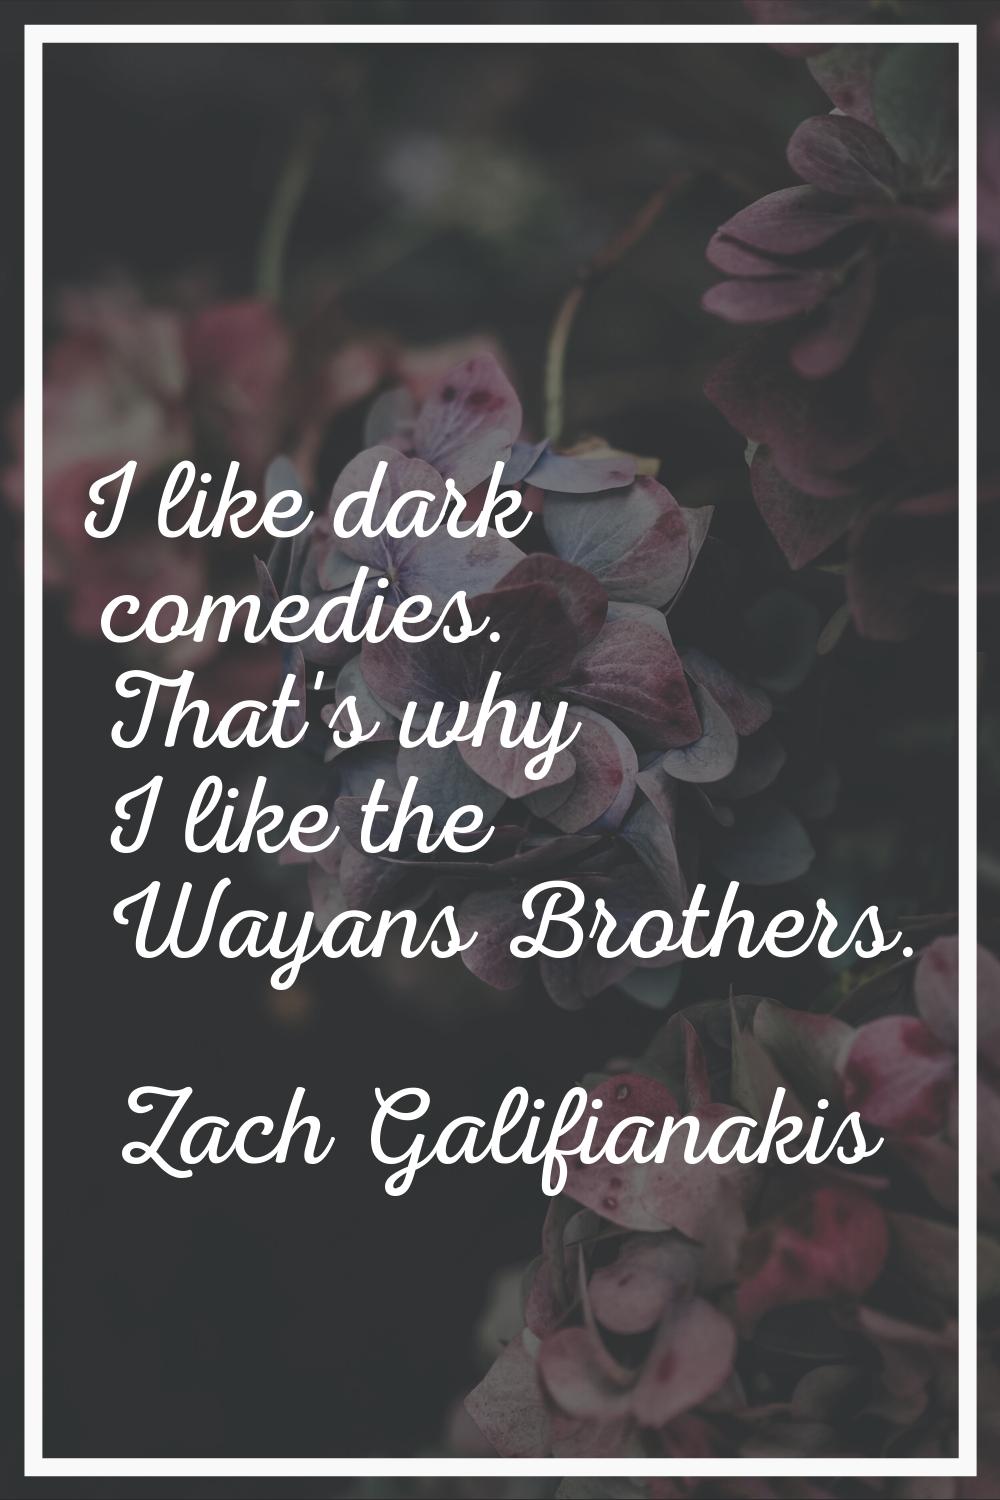 I like dark comedies. That's why I like the Wayans Brothers.